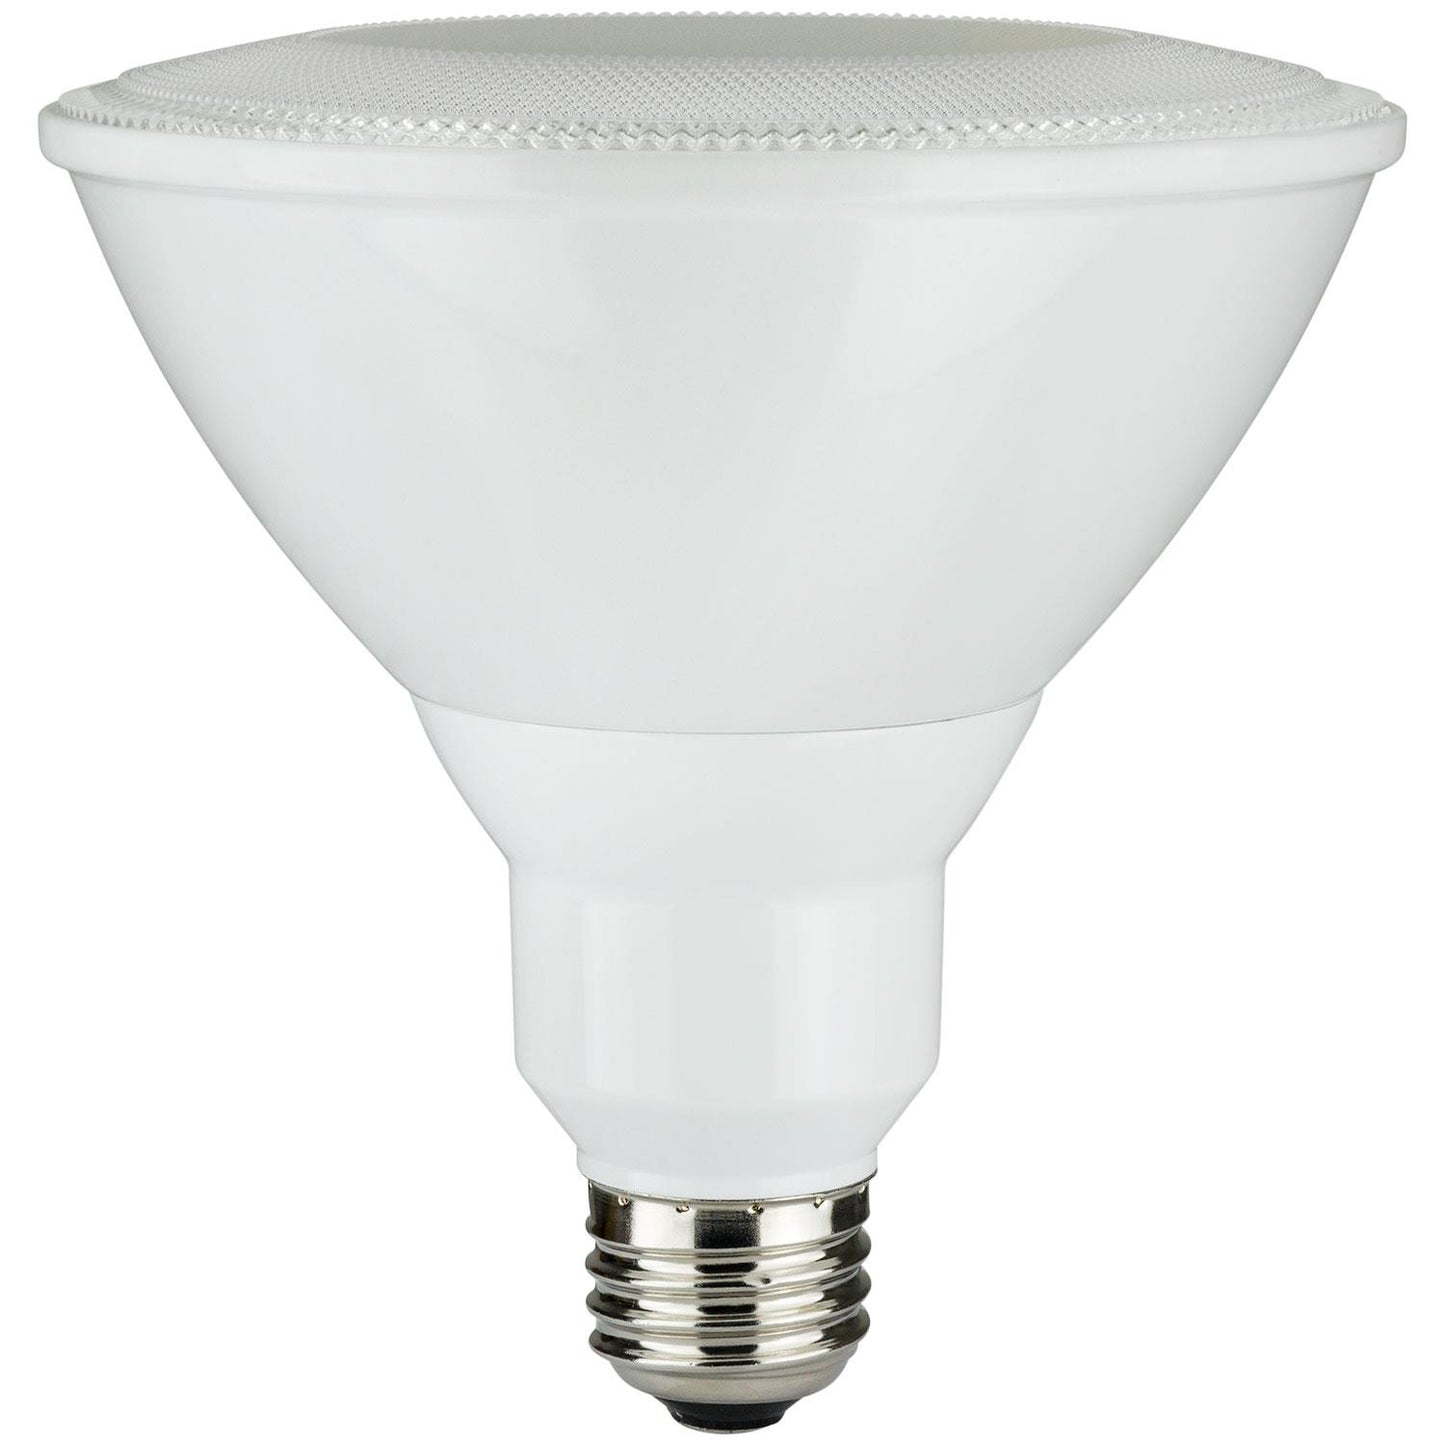 Sunlite PAR38/LED/18W/FL40/D/E/65K IP65 UL Listed And Energy Star Certified PAR38 Floodlight Light Bulbs